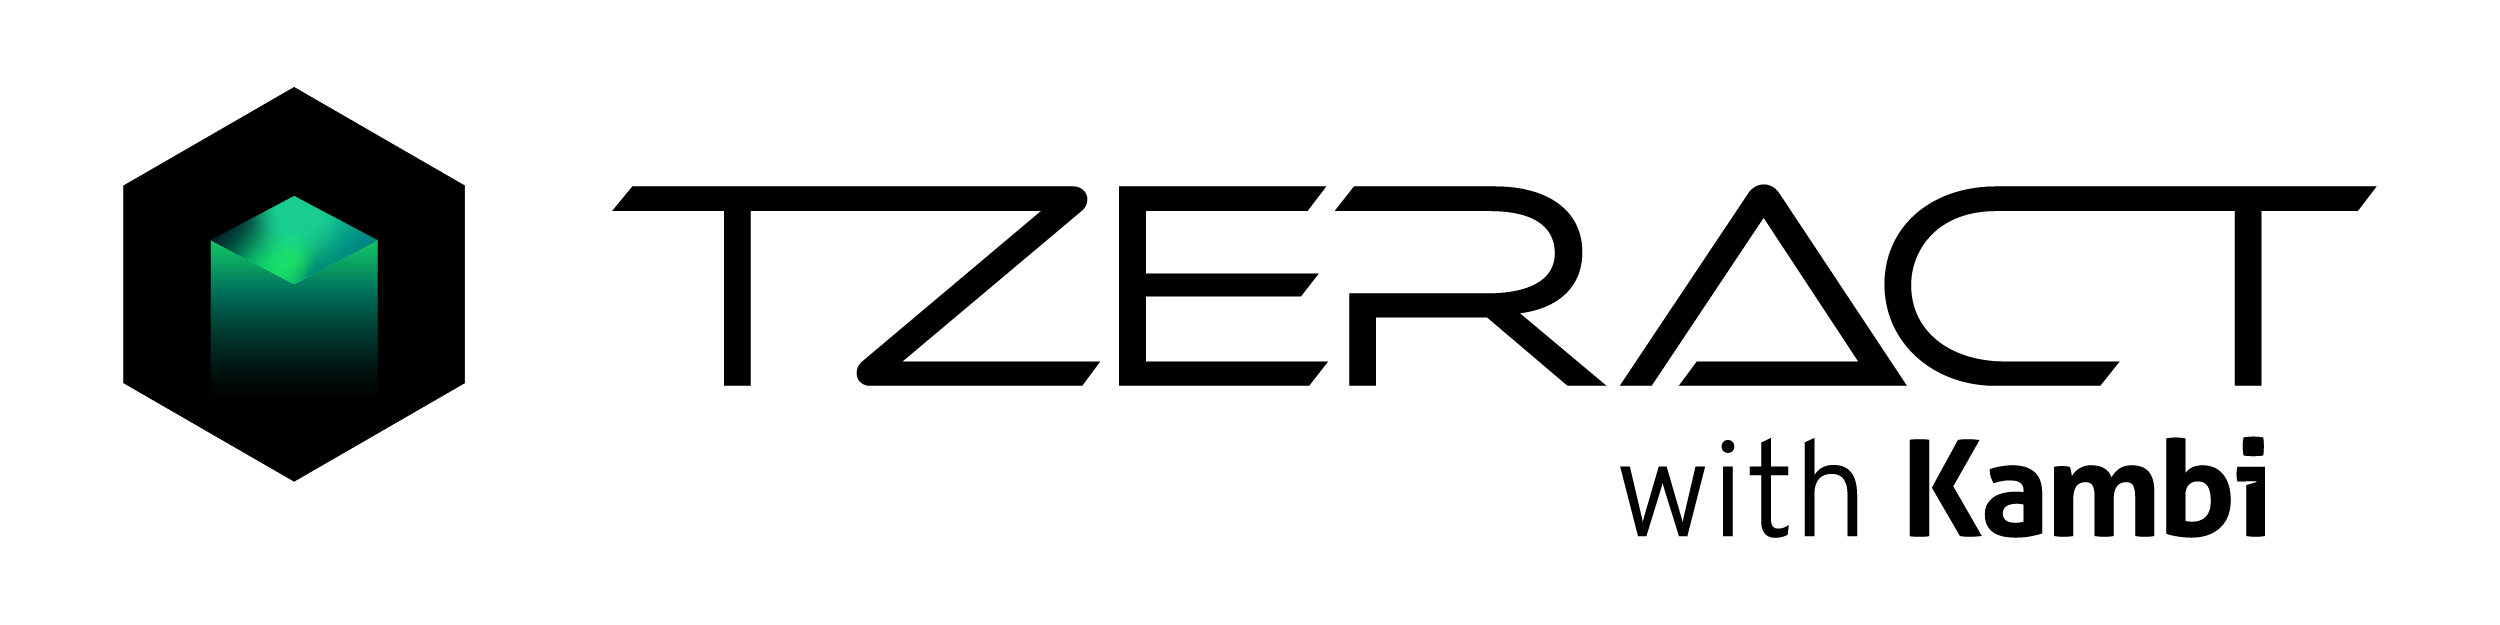 Tzeract Logo w Kambi